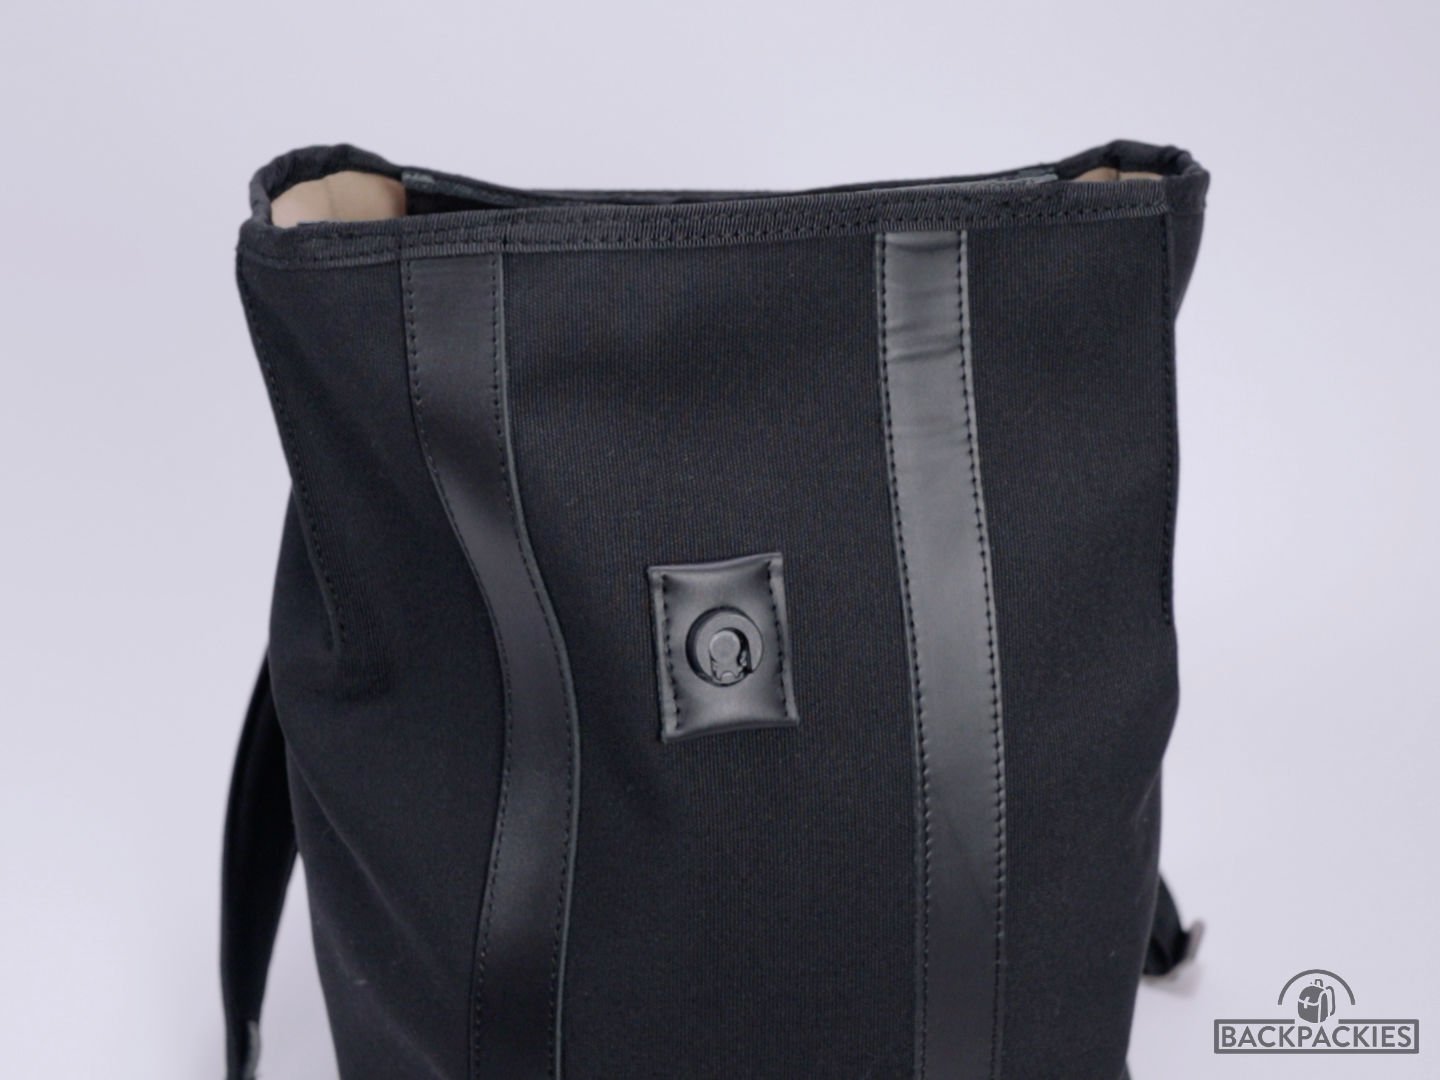 Harber London Commuter backpack review - magnetic lid 